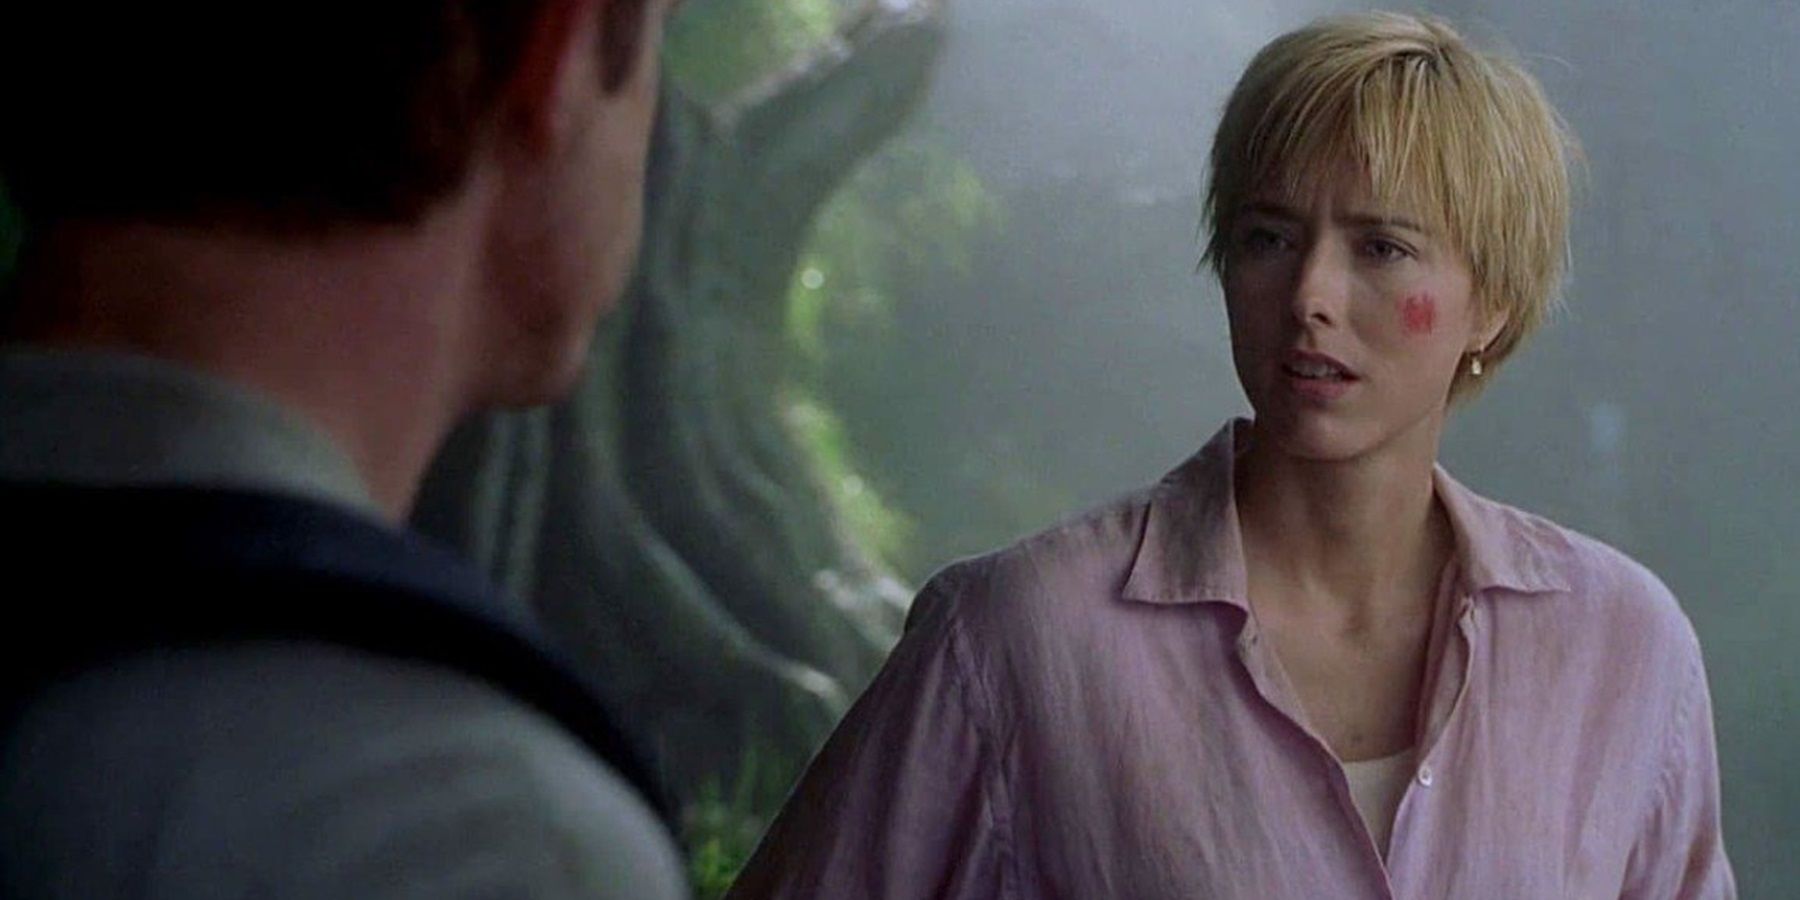 Amanda talking to Paul in Jurassic Park III